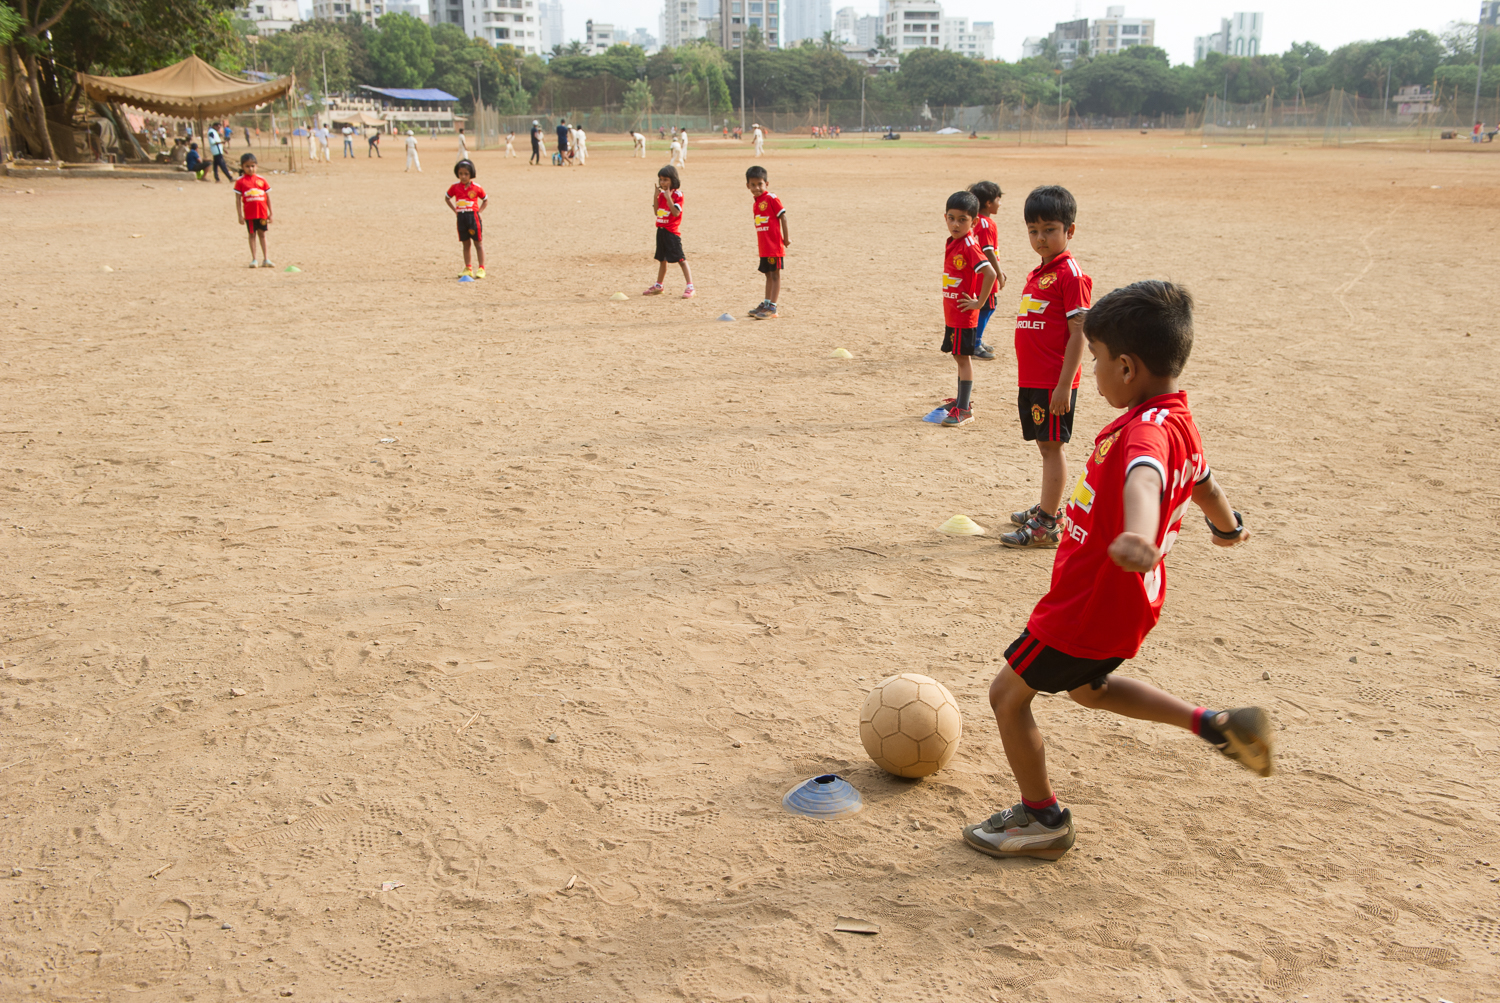  Children during football practice, Mumbai, 2019 